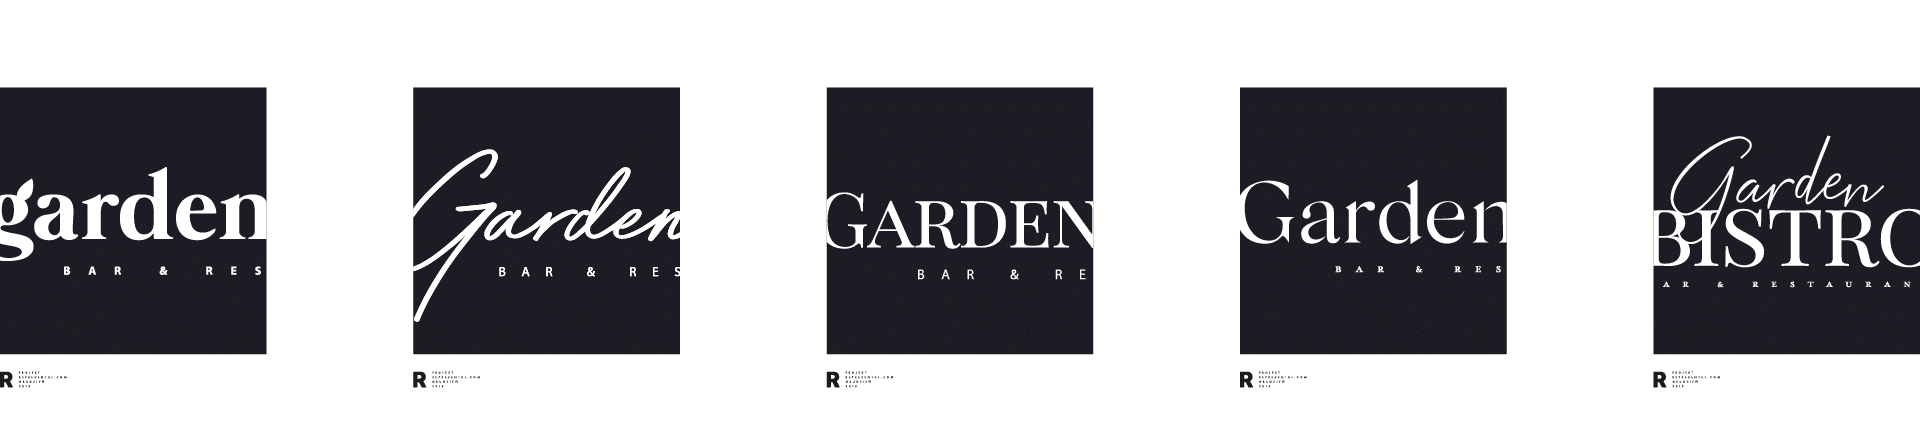 Gardenbistro – nazwa i branding